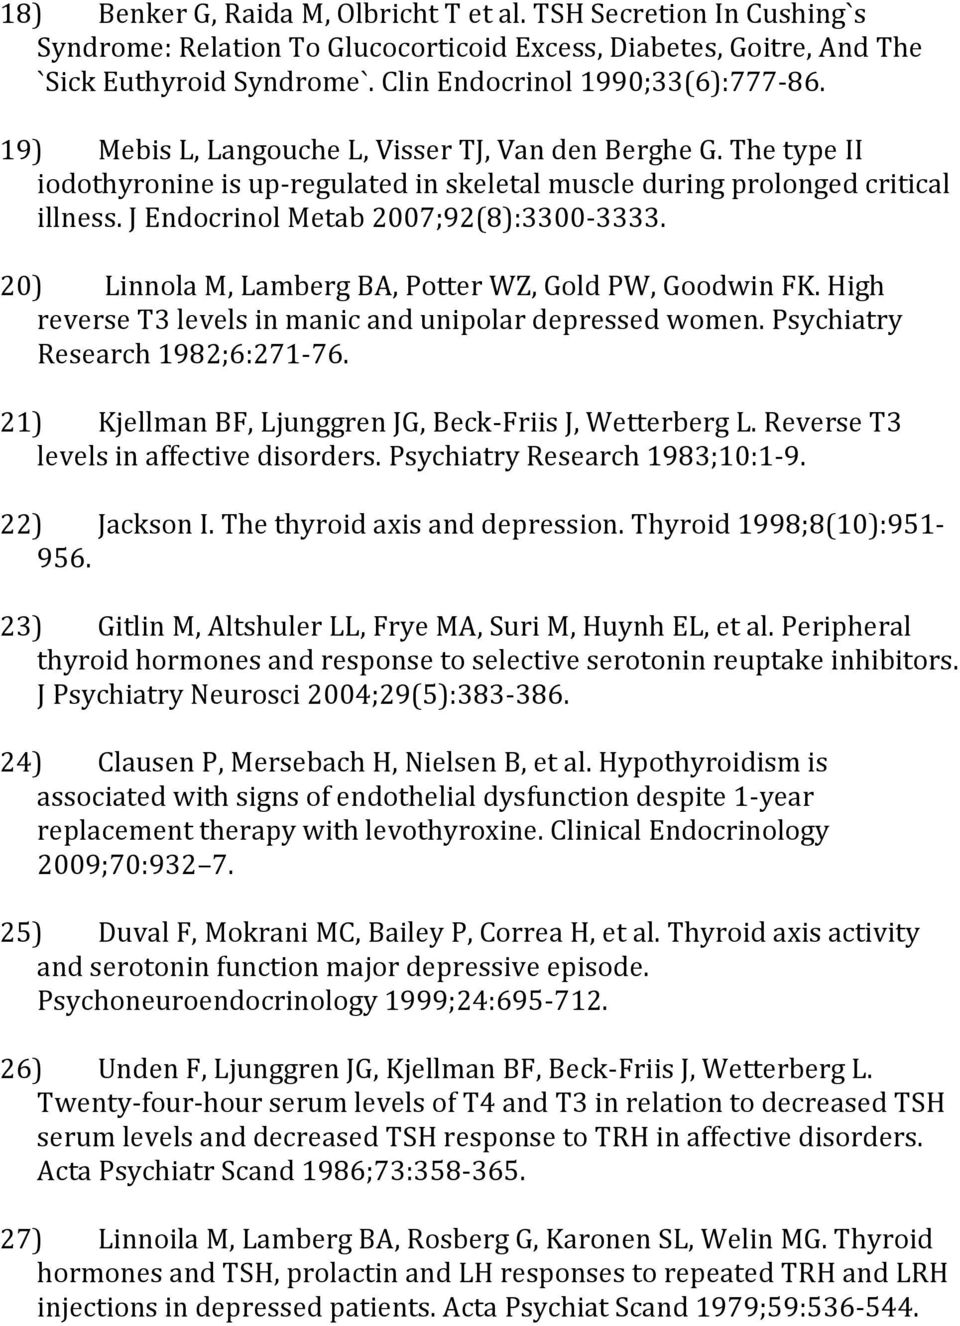 20) Linnola M, Lamberg BA, Potter WZ, Gold PW, Goodwin FK. High reverse T3 levels in manic and unipolar depressed women. Psychiatry Research 1982;6:271-76.